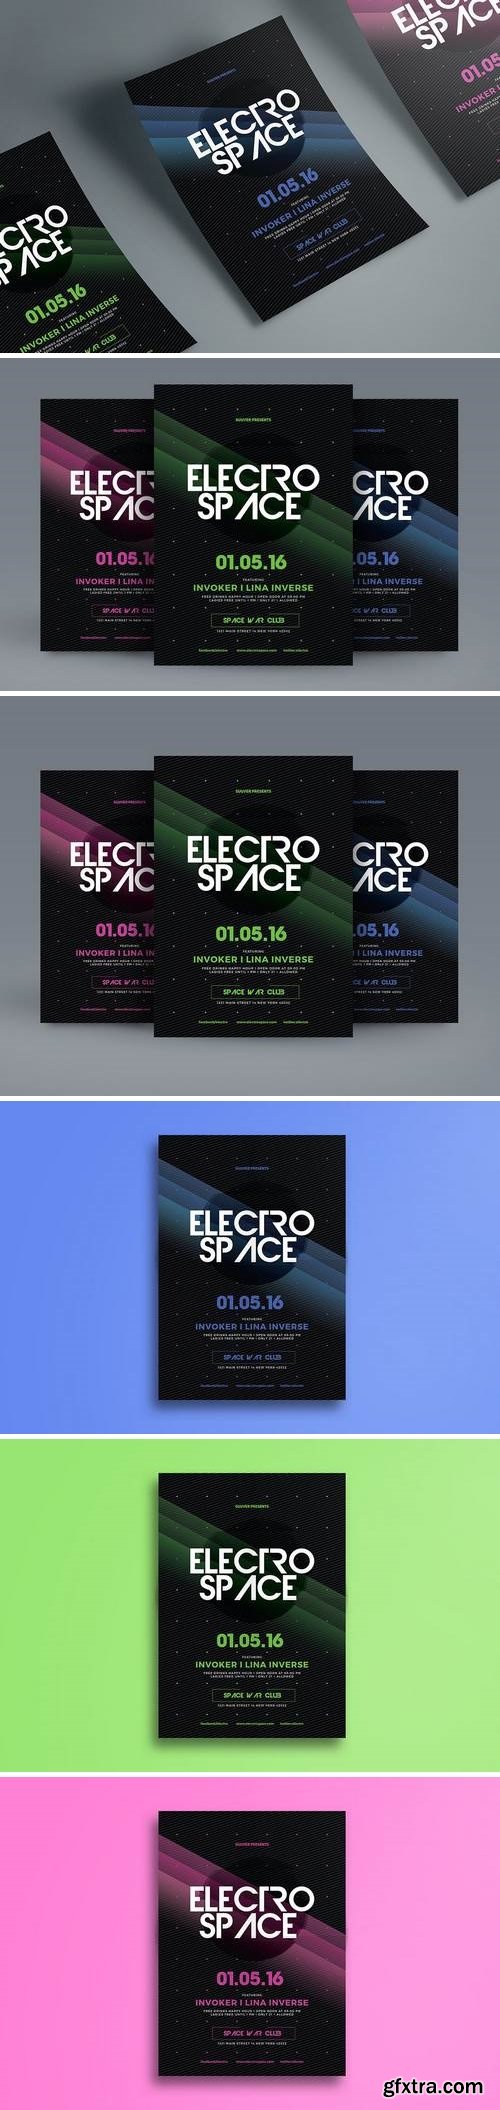 Electro Space Sound Flyer